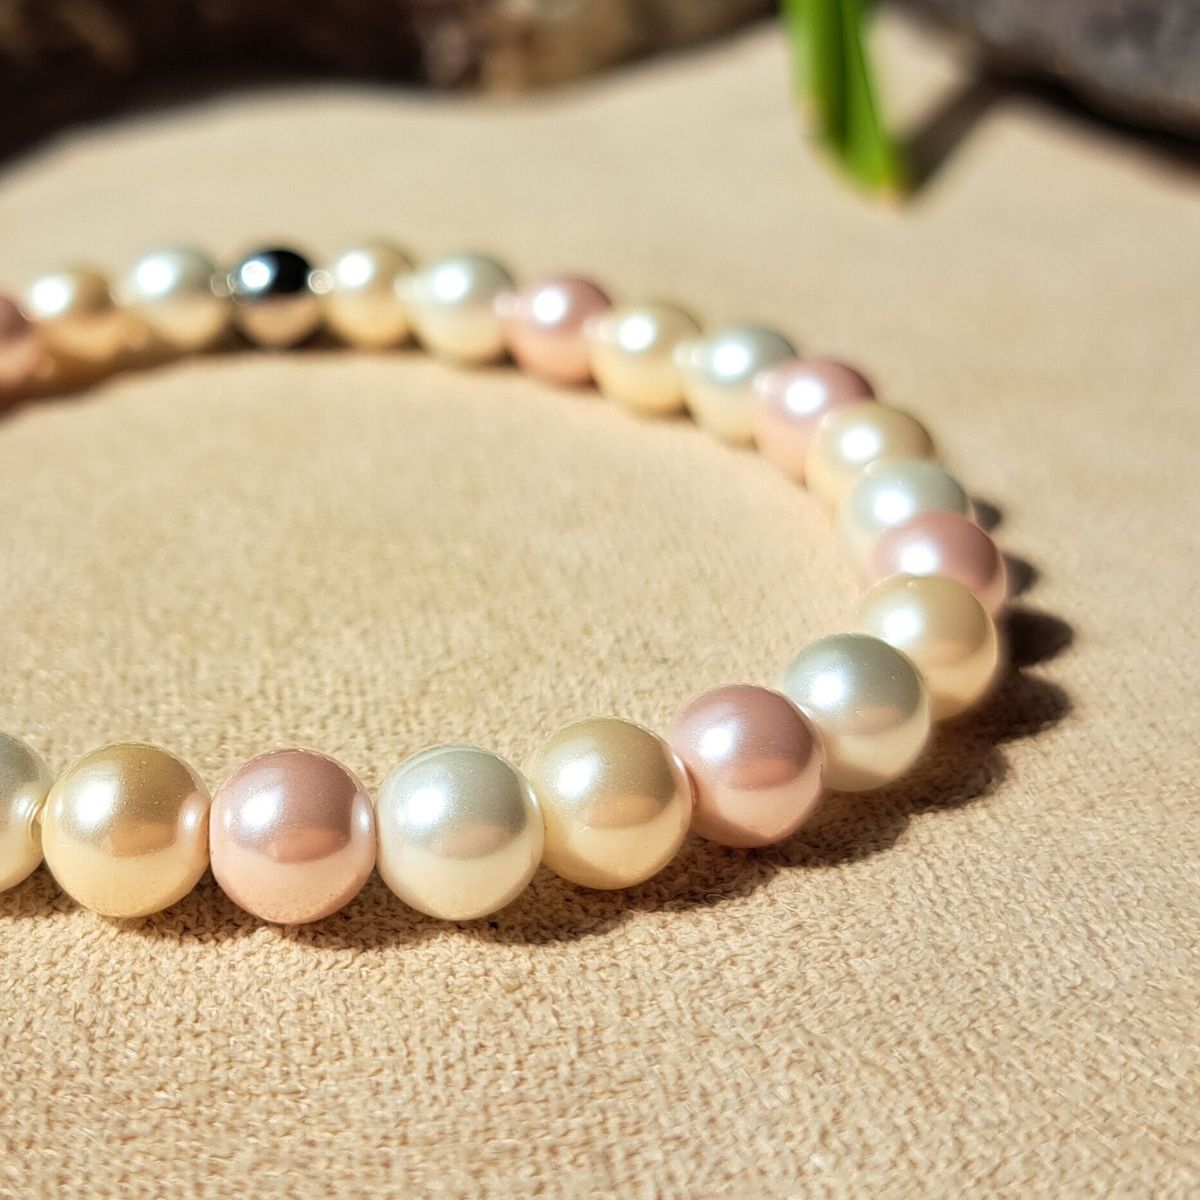 Pearl bracelet close-up.